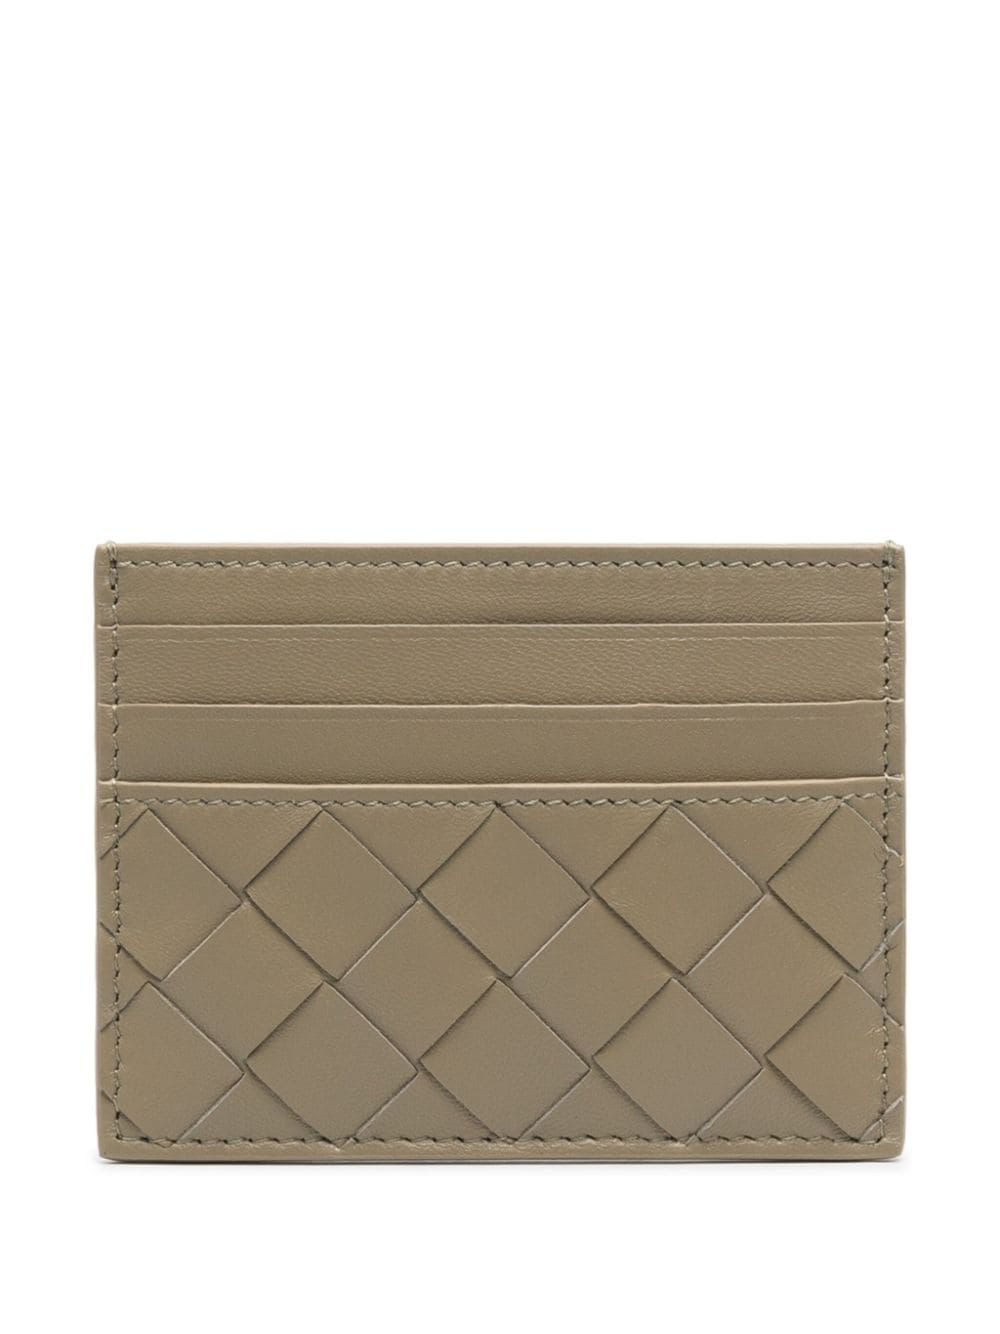 Bottega Veneta Intrecciato leather card holder - Beige